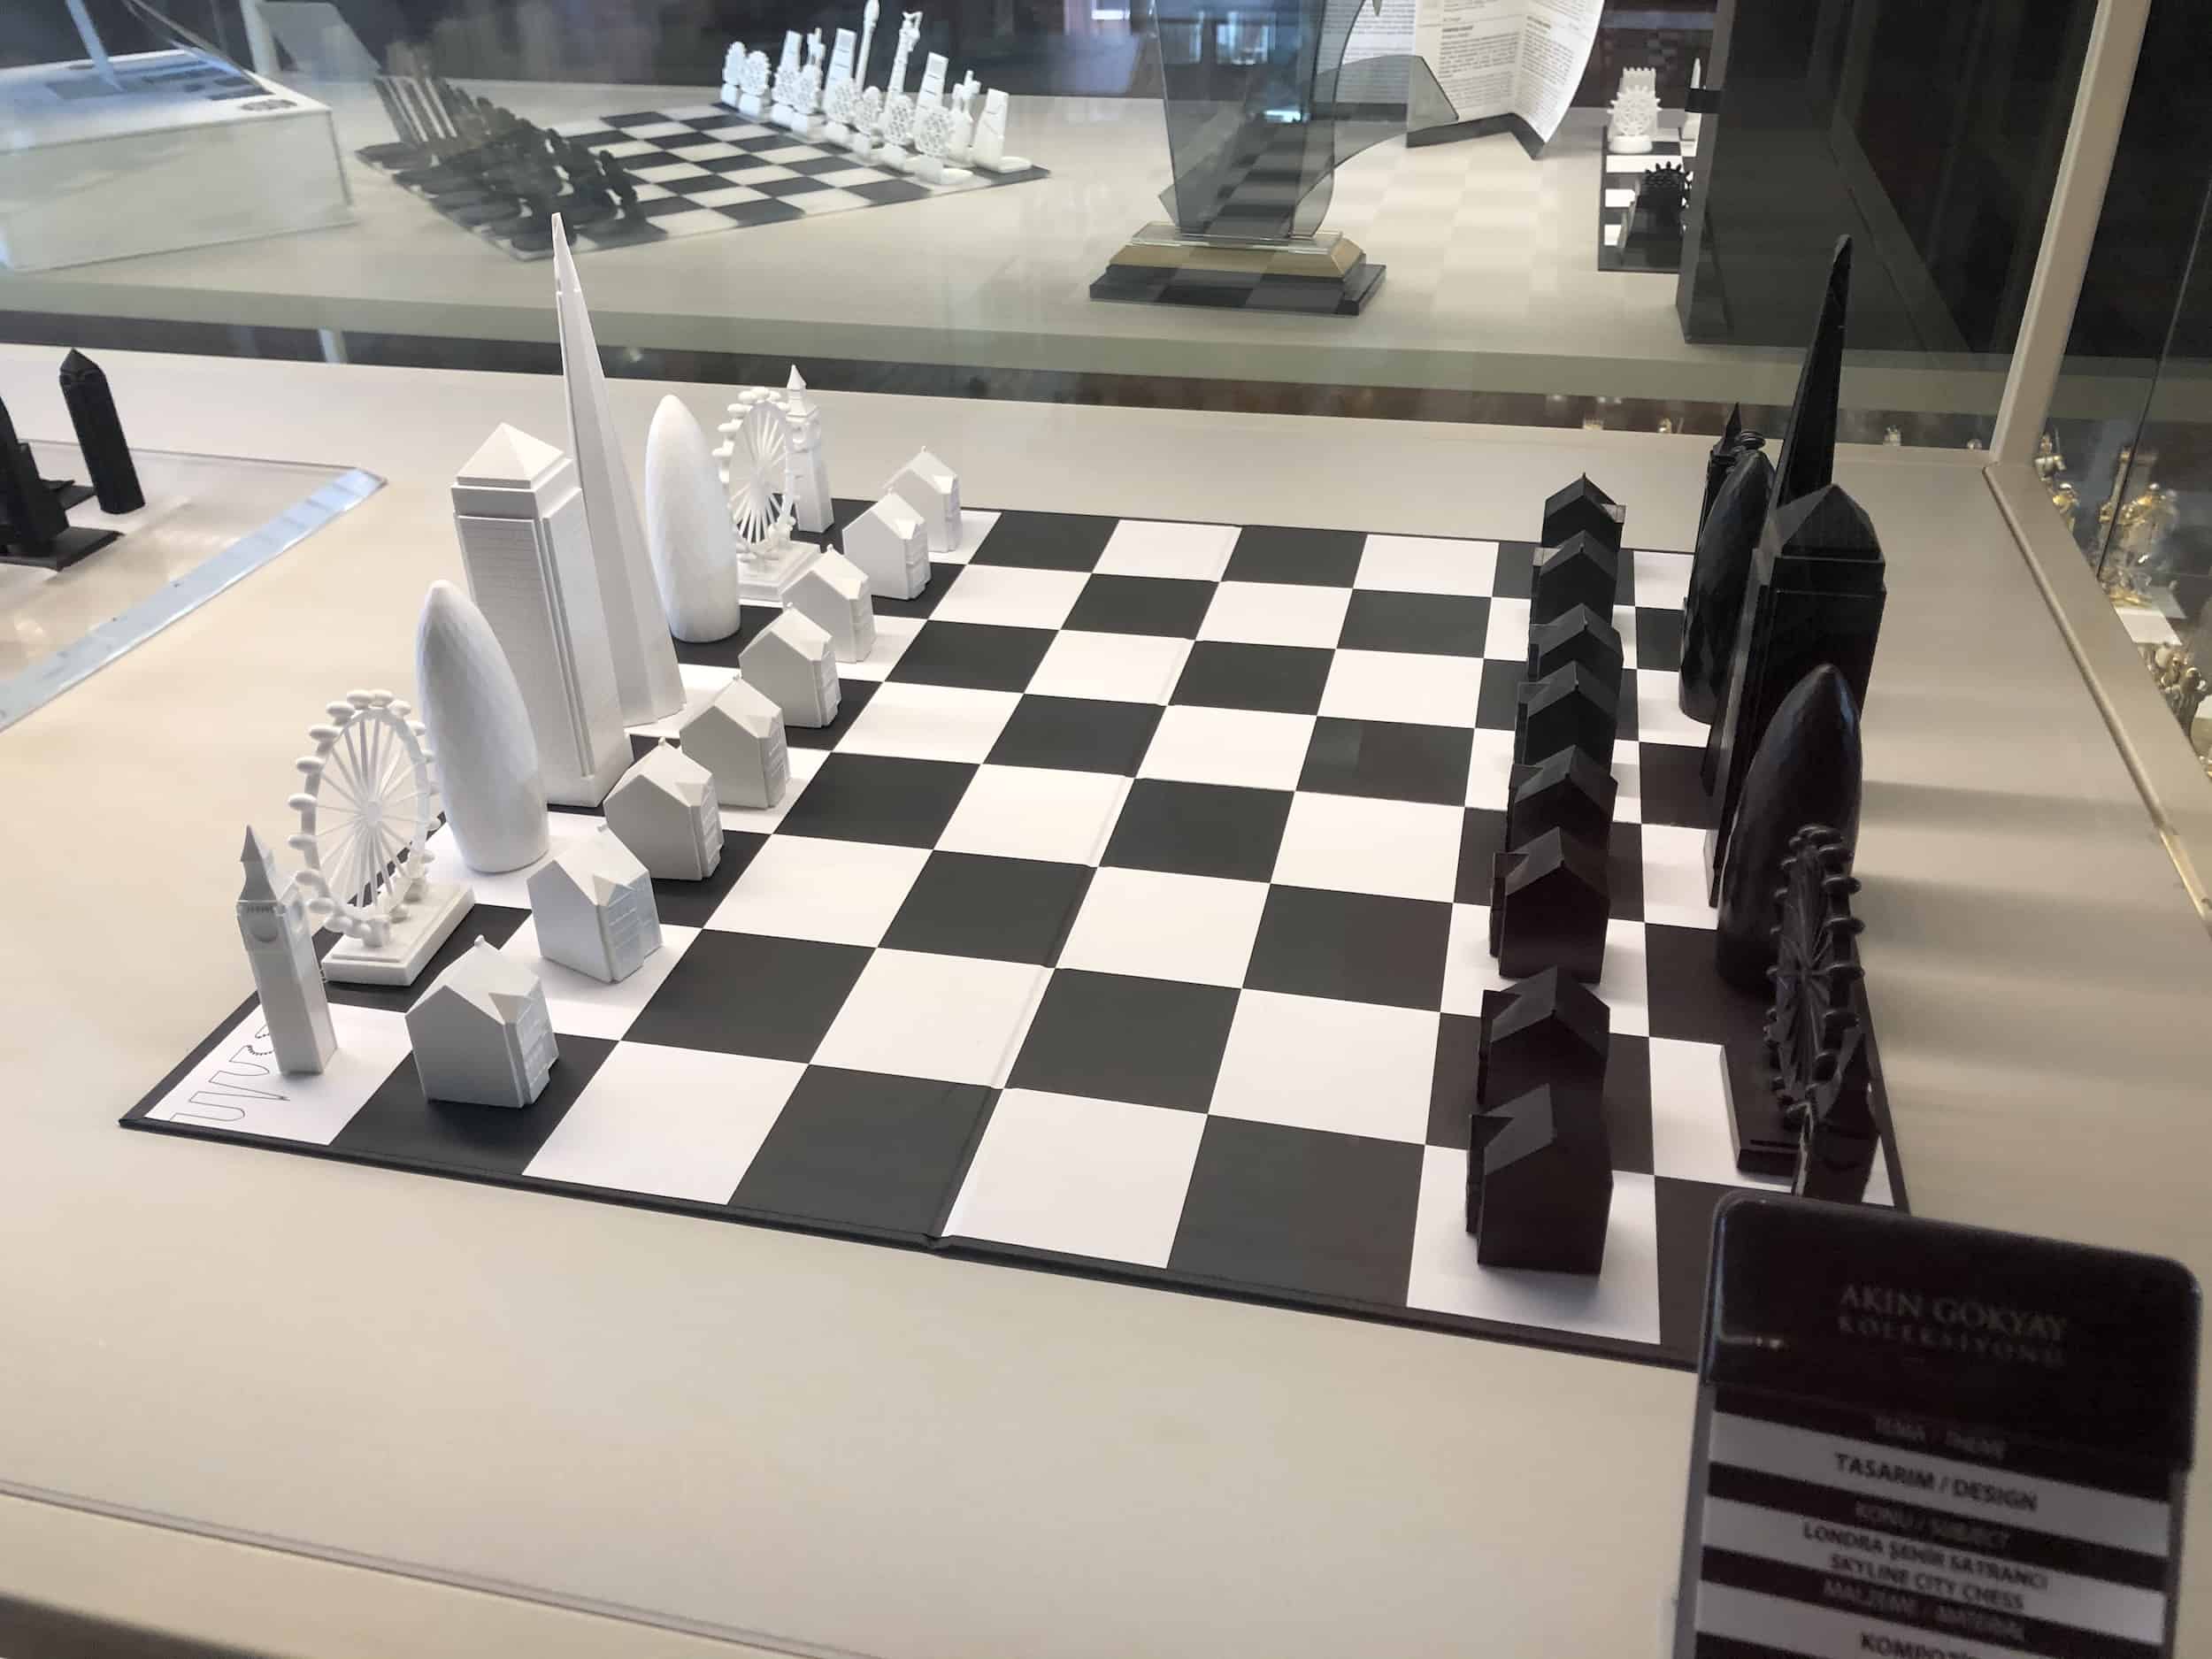 London city skyline chess set at the Gökyay Foundation Chess Museum in Ankara, Turkey